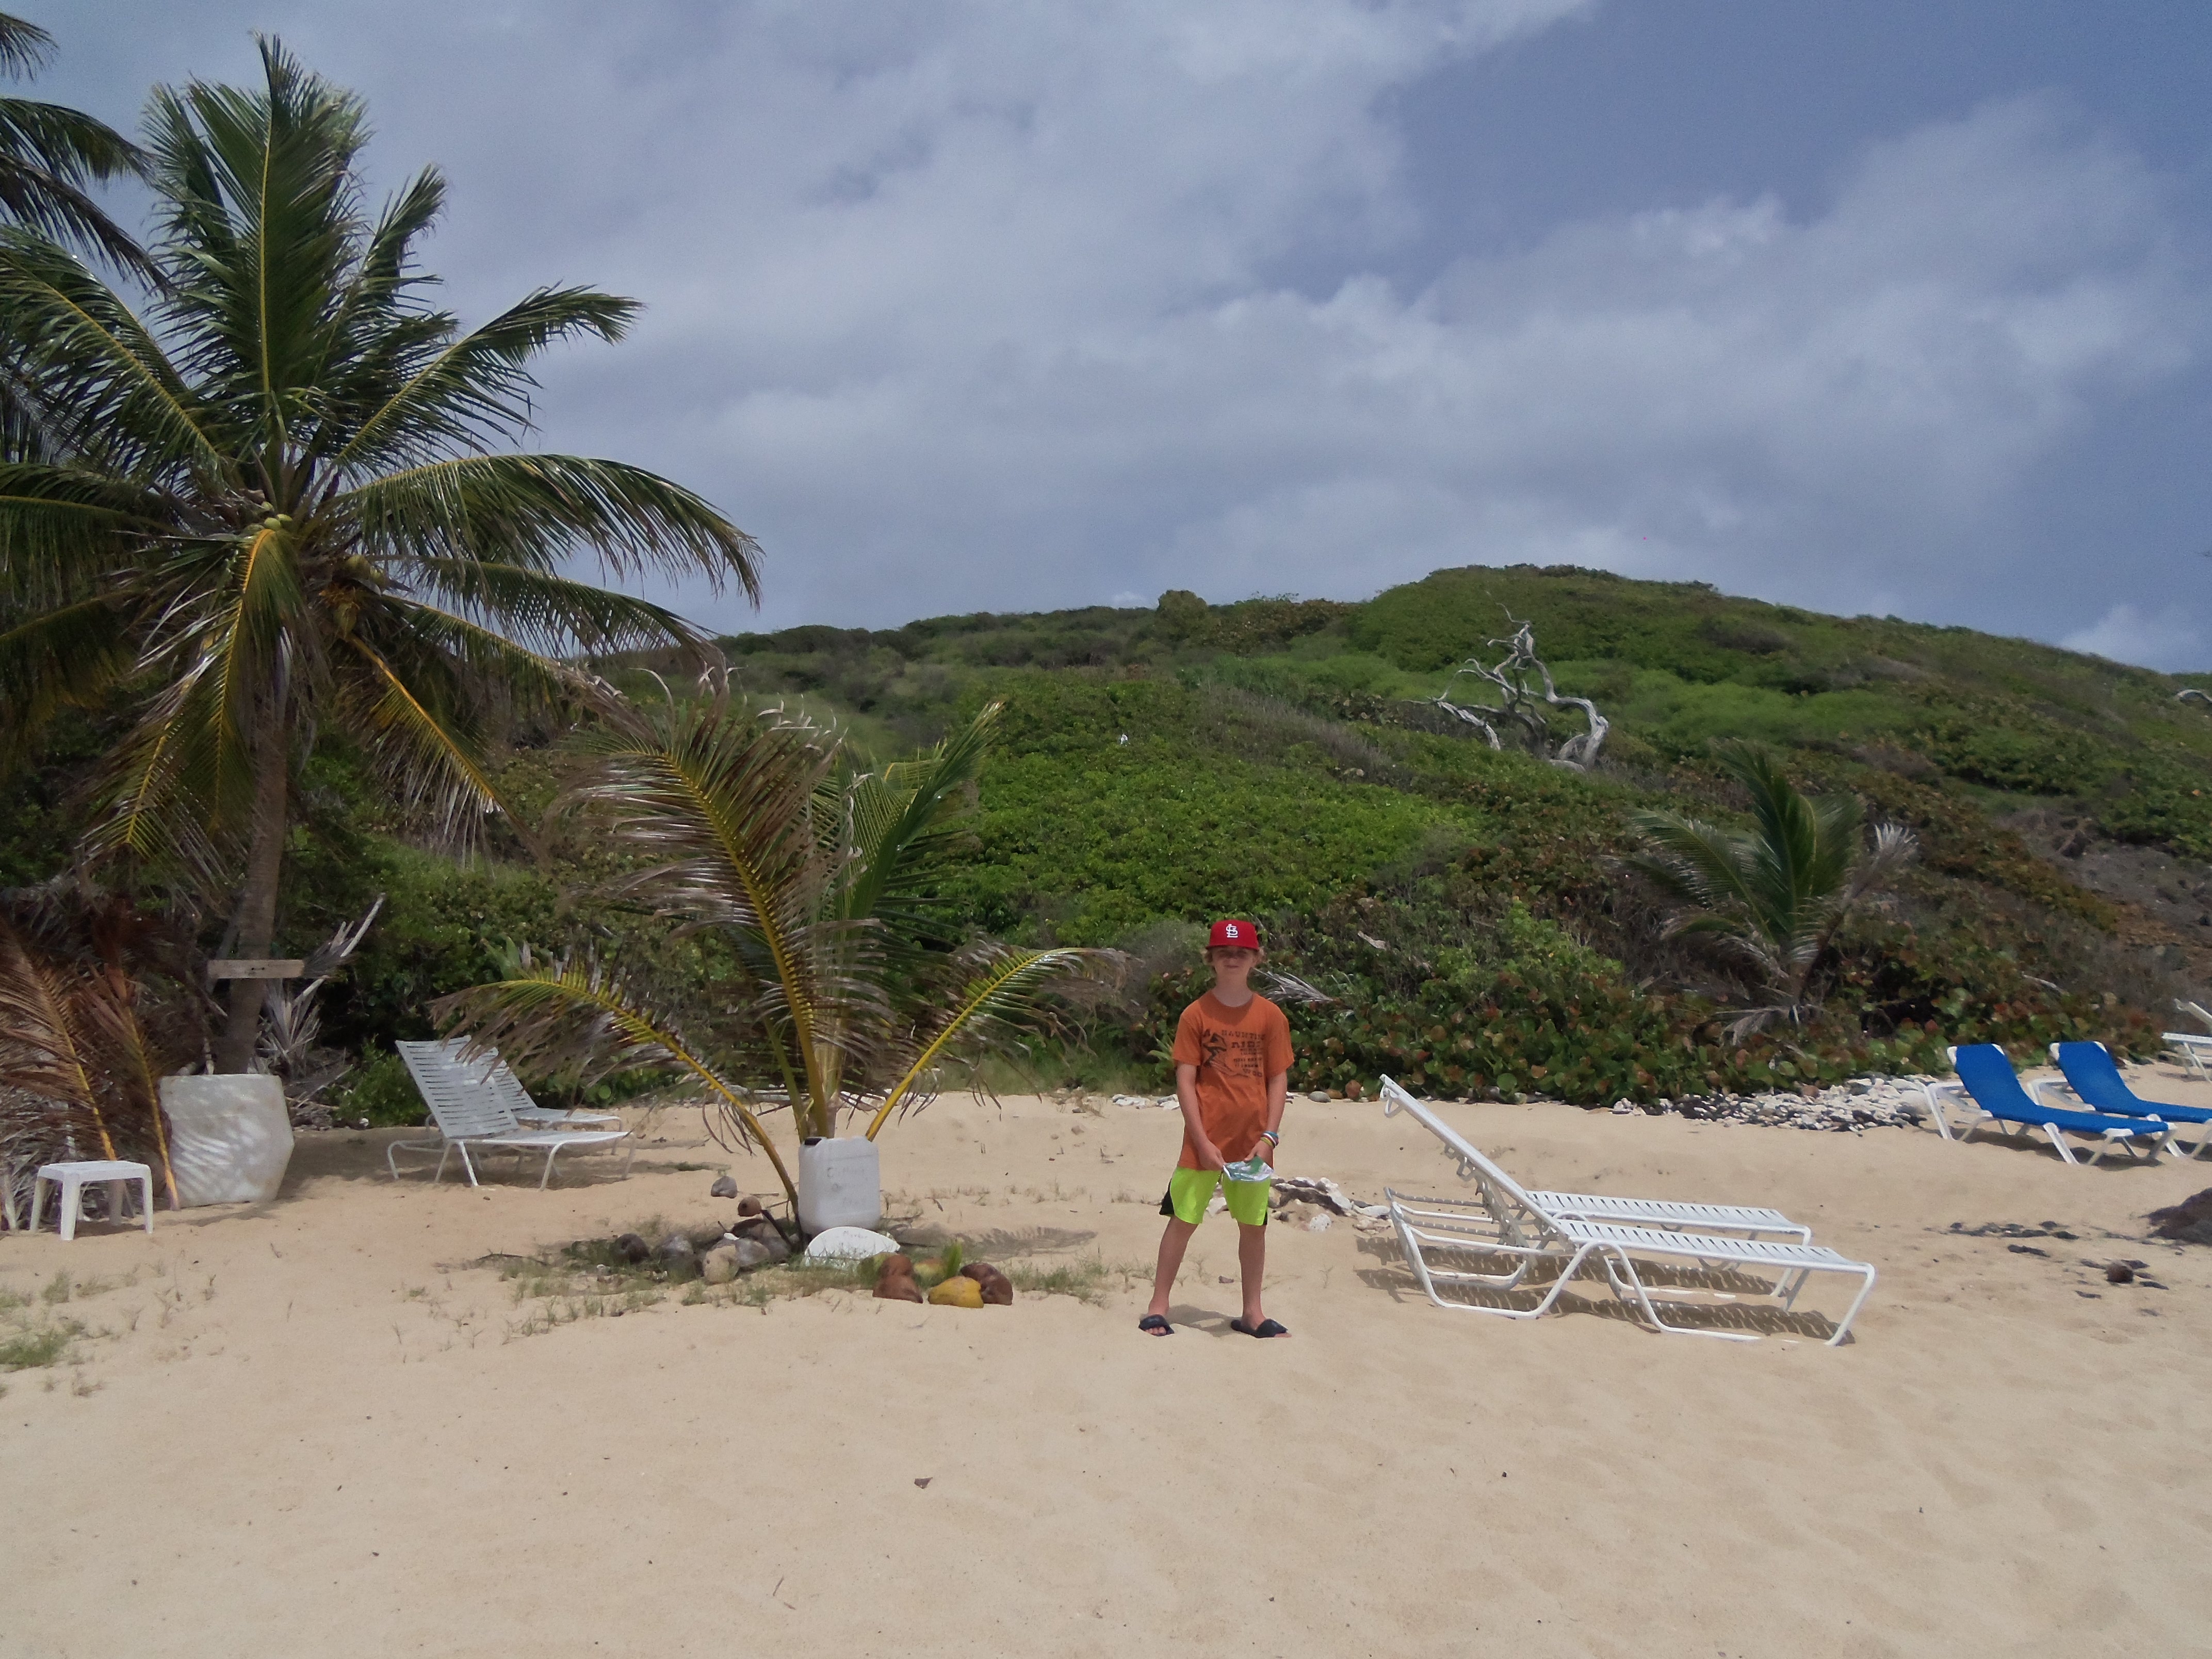 Puerto rican nude beach